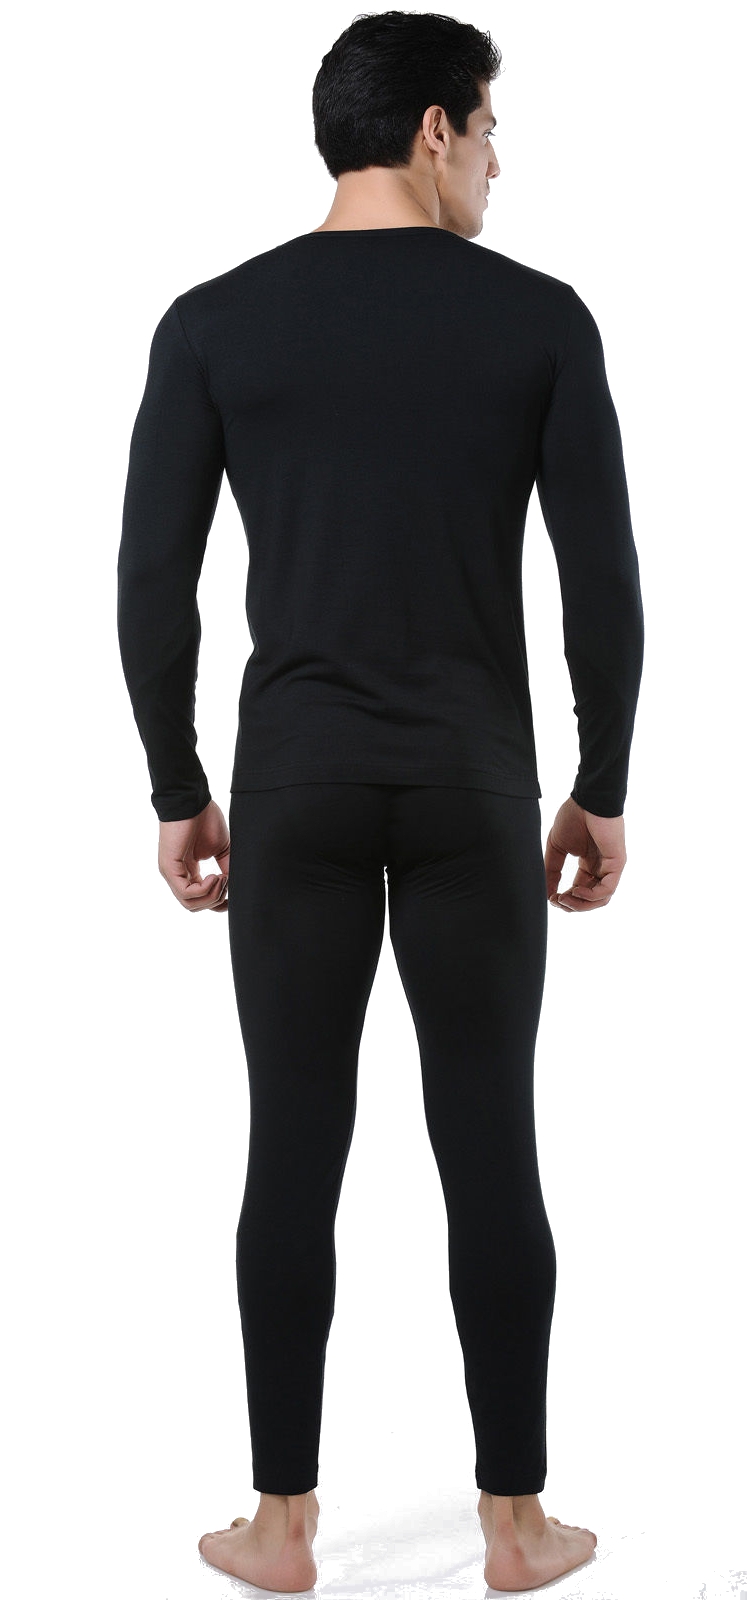 Men’s Ultra-Soft Tagless Fleece Lined Thermal Top & Bottom Underwear Set, Black, Large - image 3 of 5